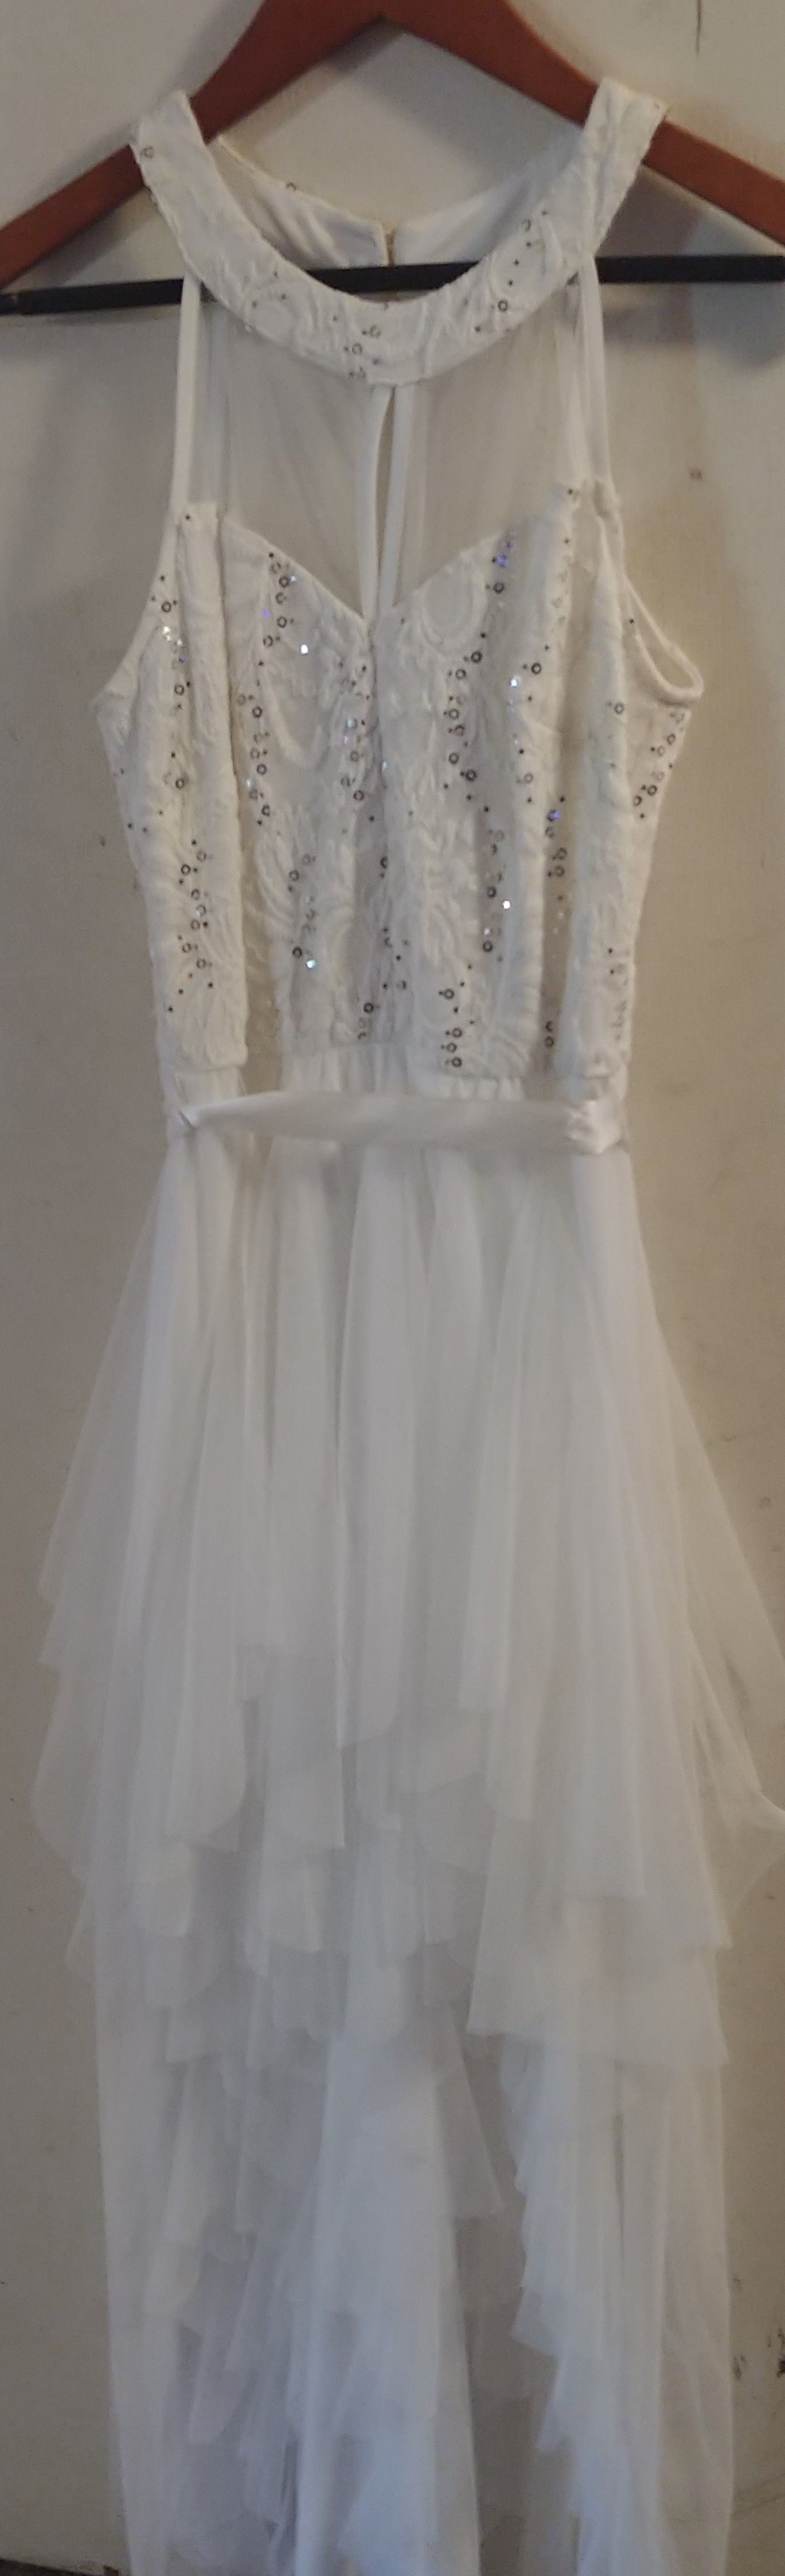 White prom dress size small